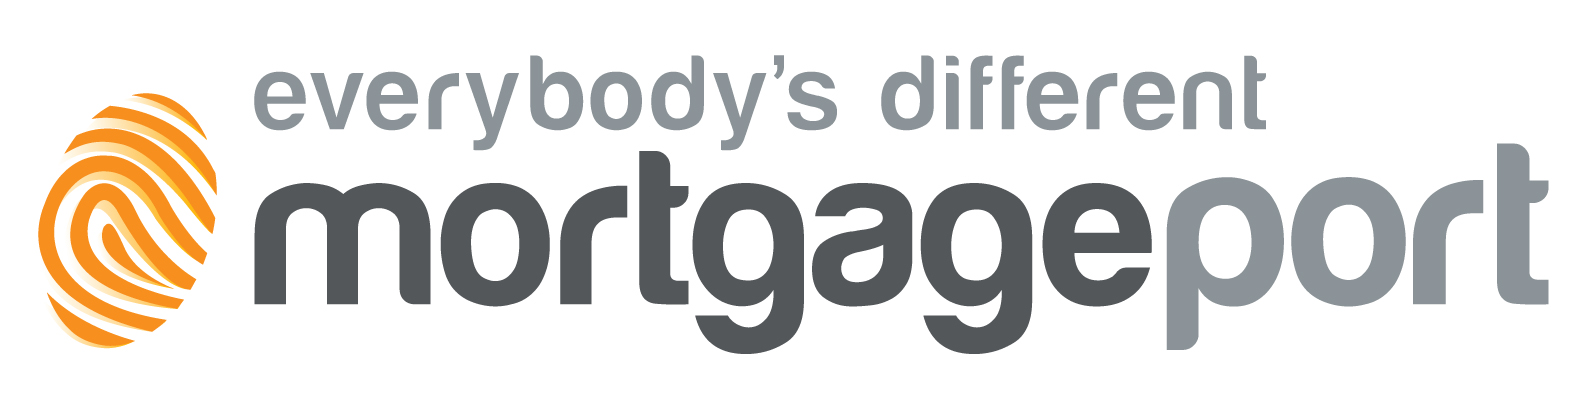 Mortgageport logo